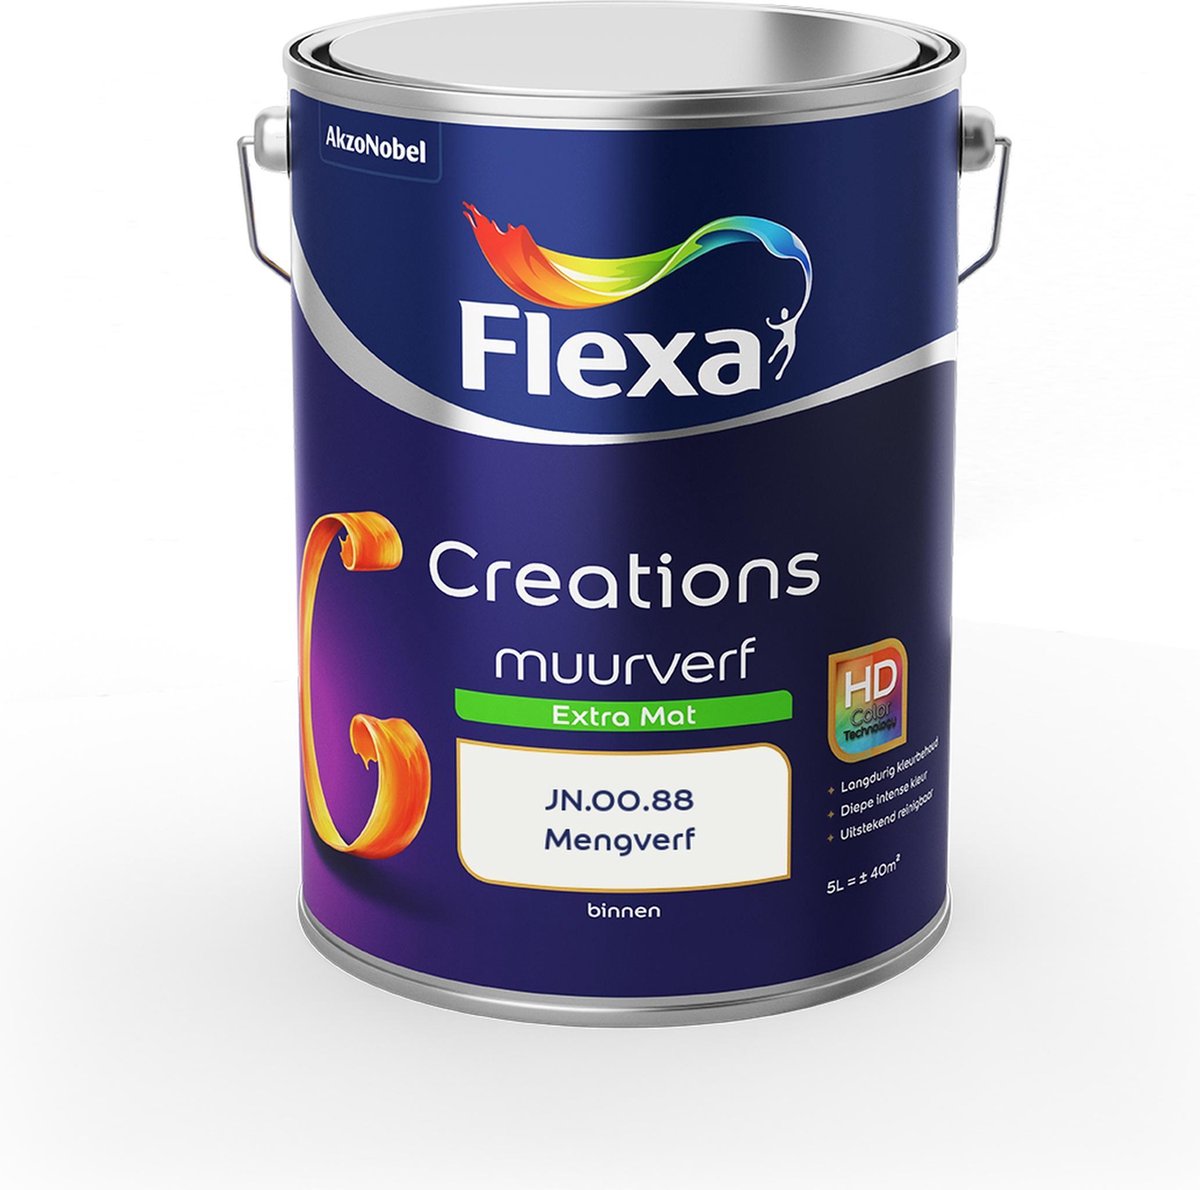 Flexa Creations Muurverf - Extra Mat - Colorfutures 2019 - JN.00.88 - 5 liter